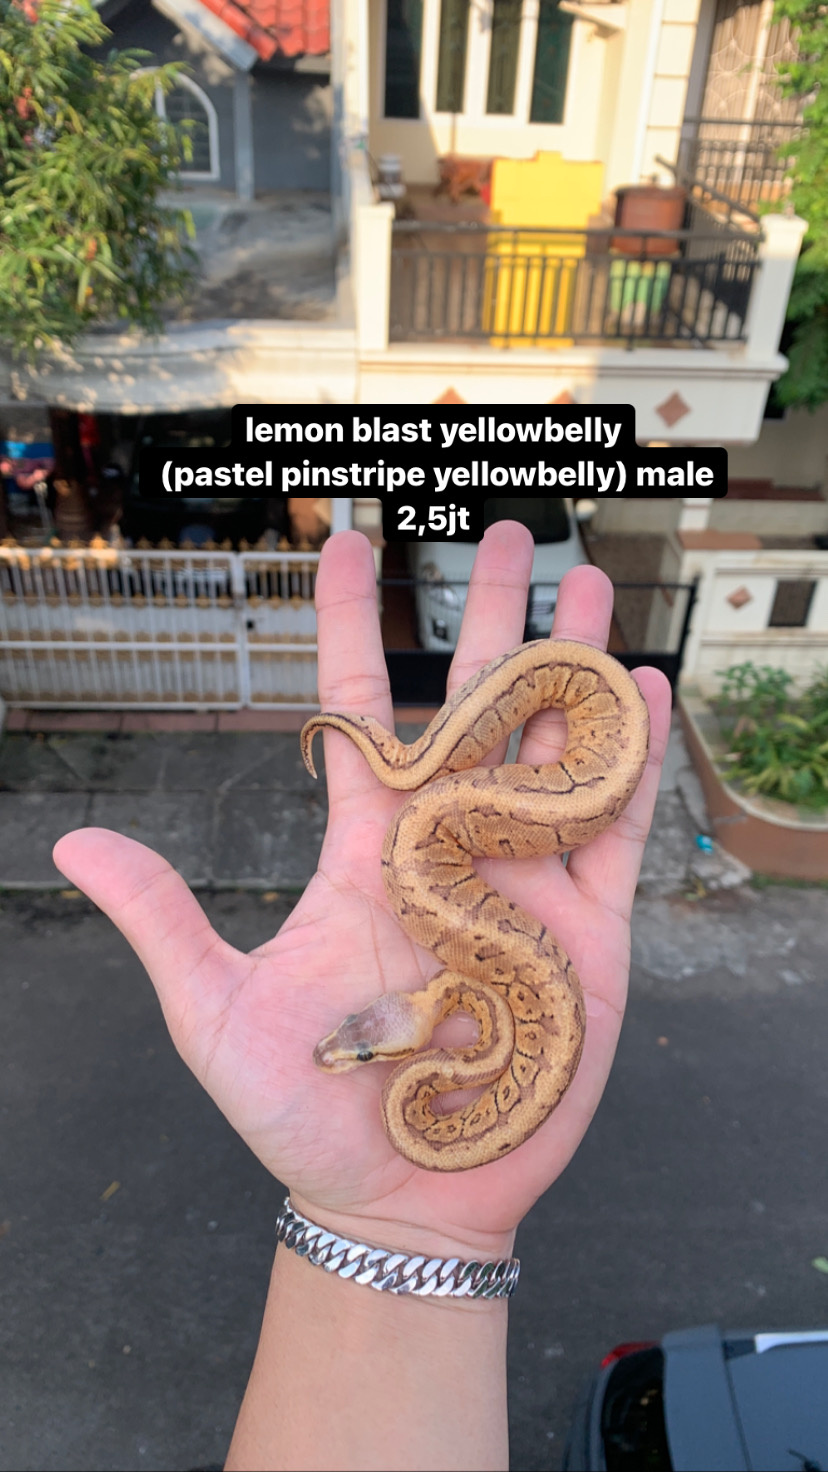 jual ballpython murah + ball python lemon blast yb